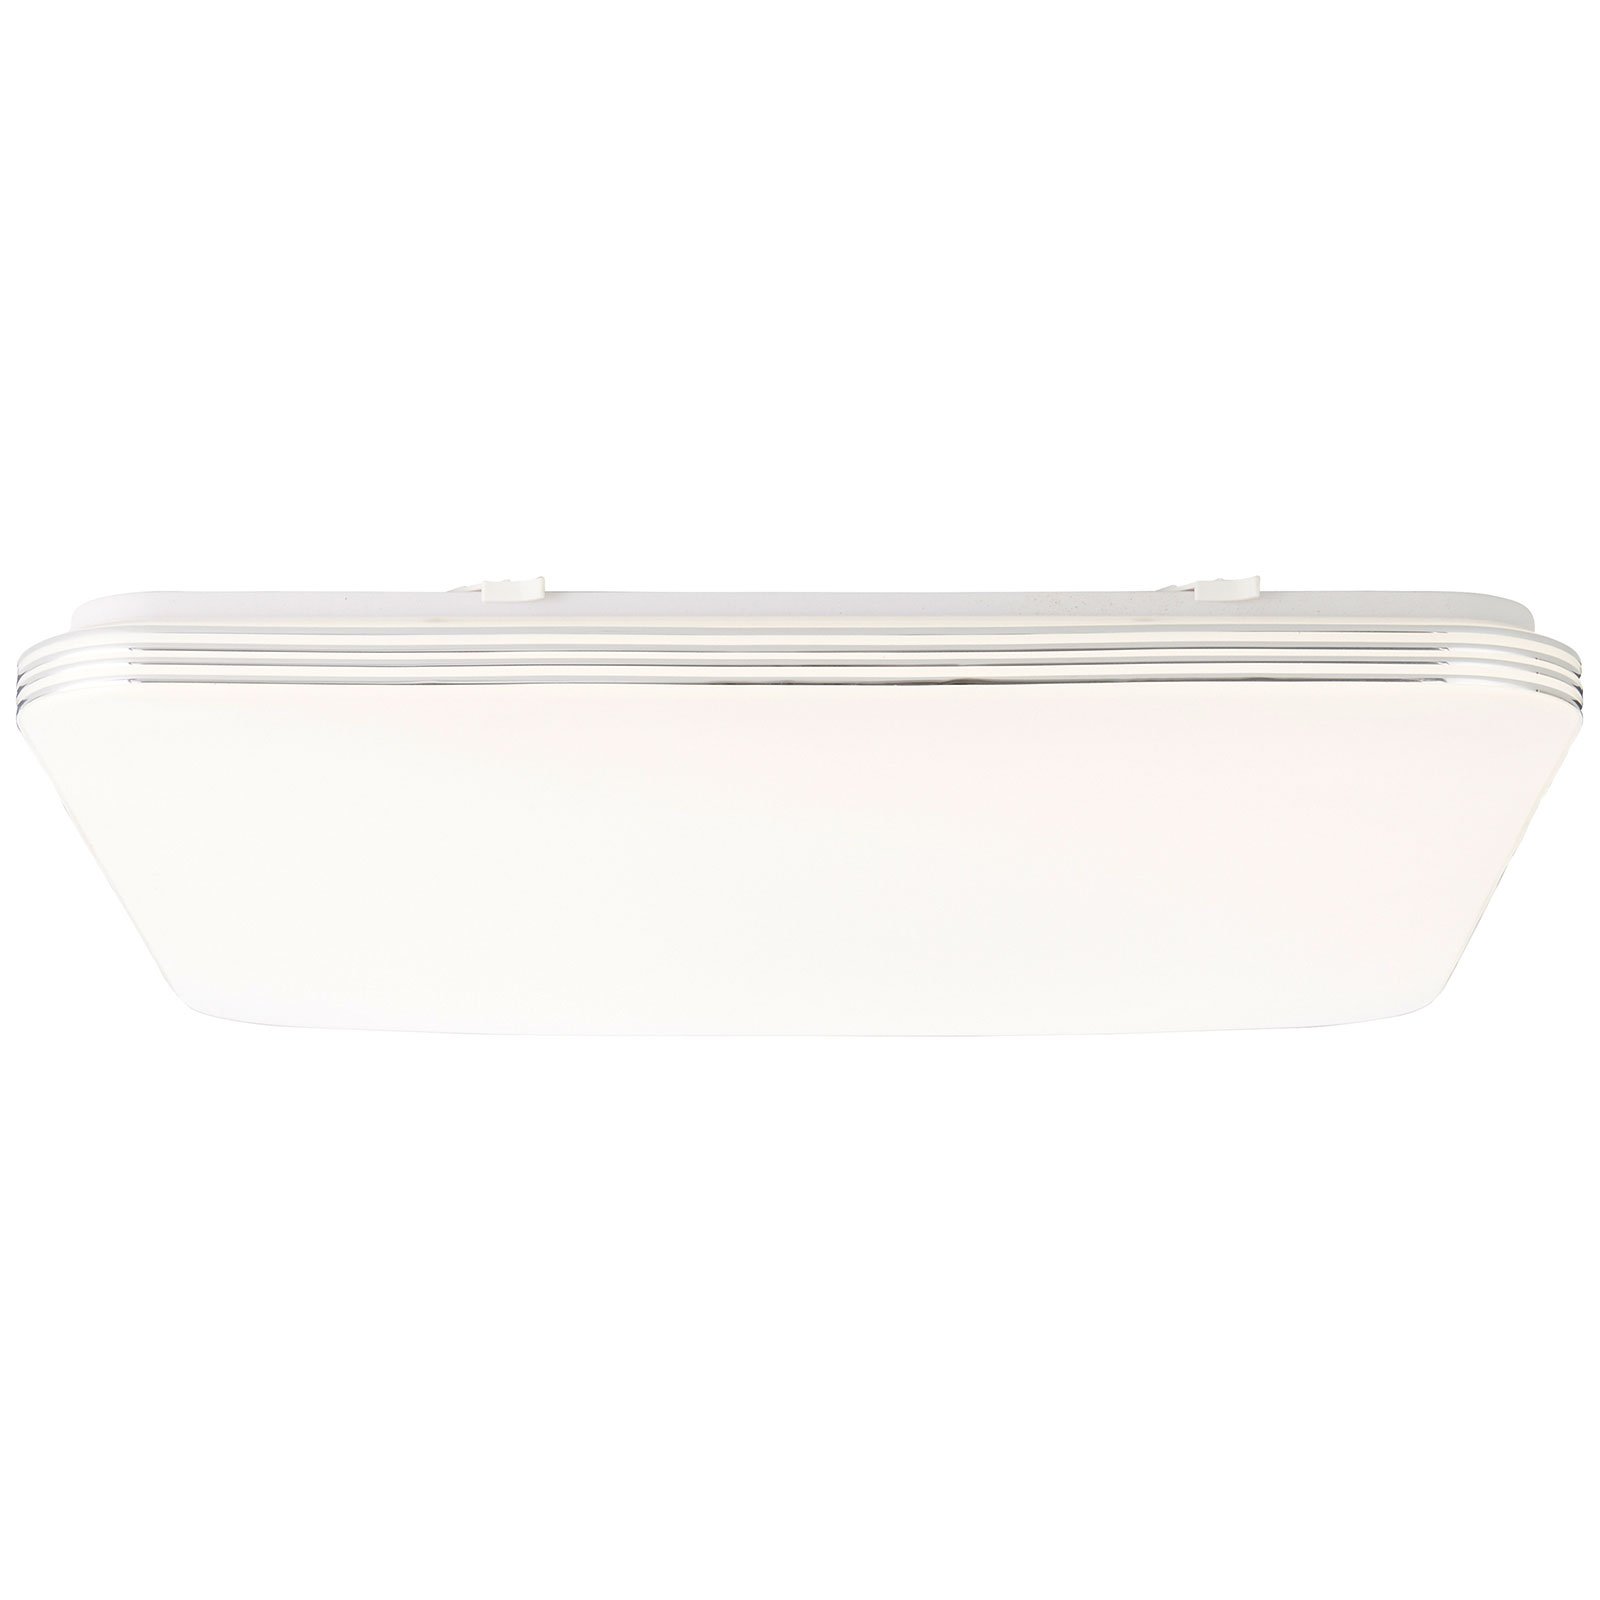 LED plafondlamp Ariella wit/chroom, 54x54 cm